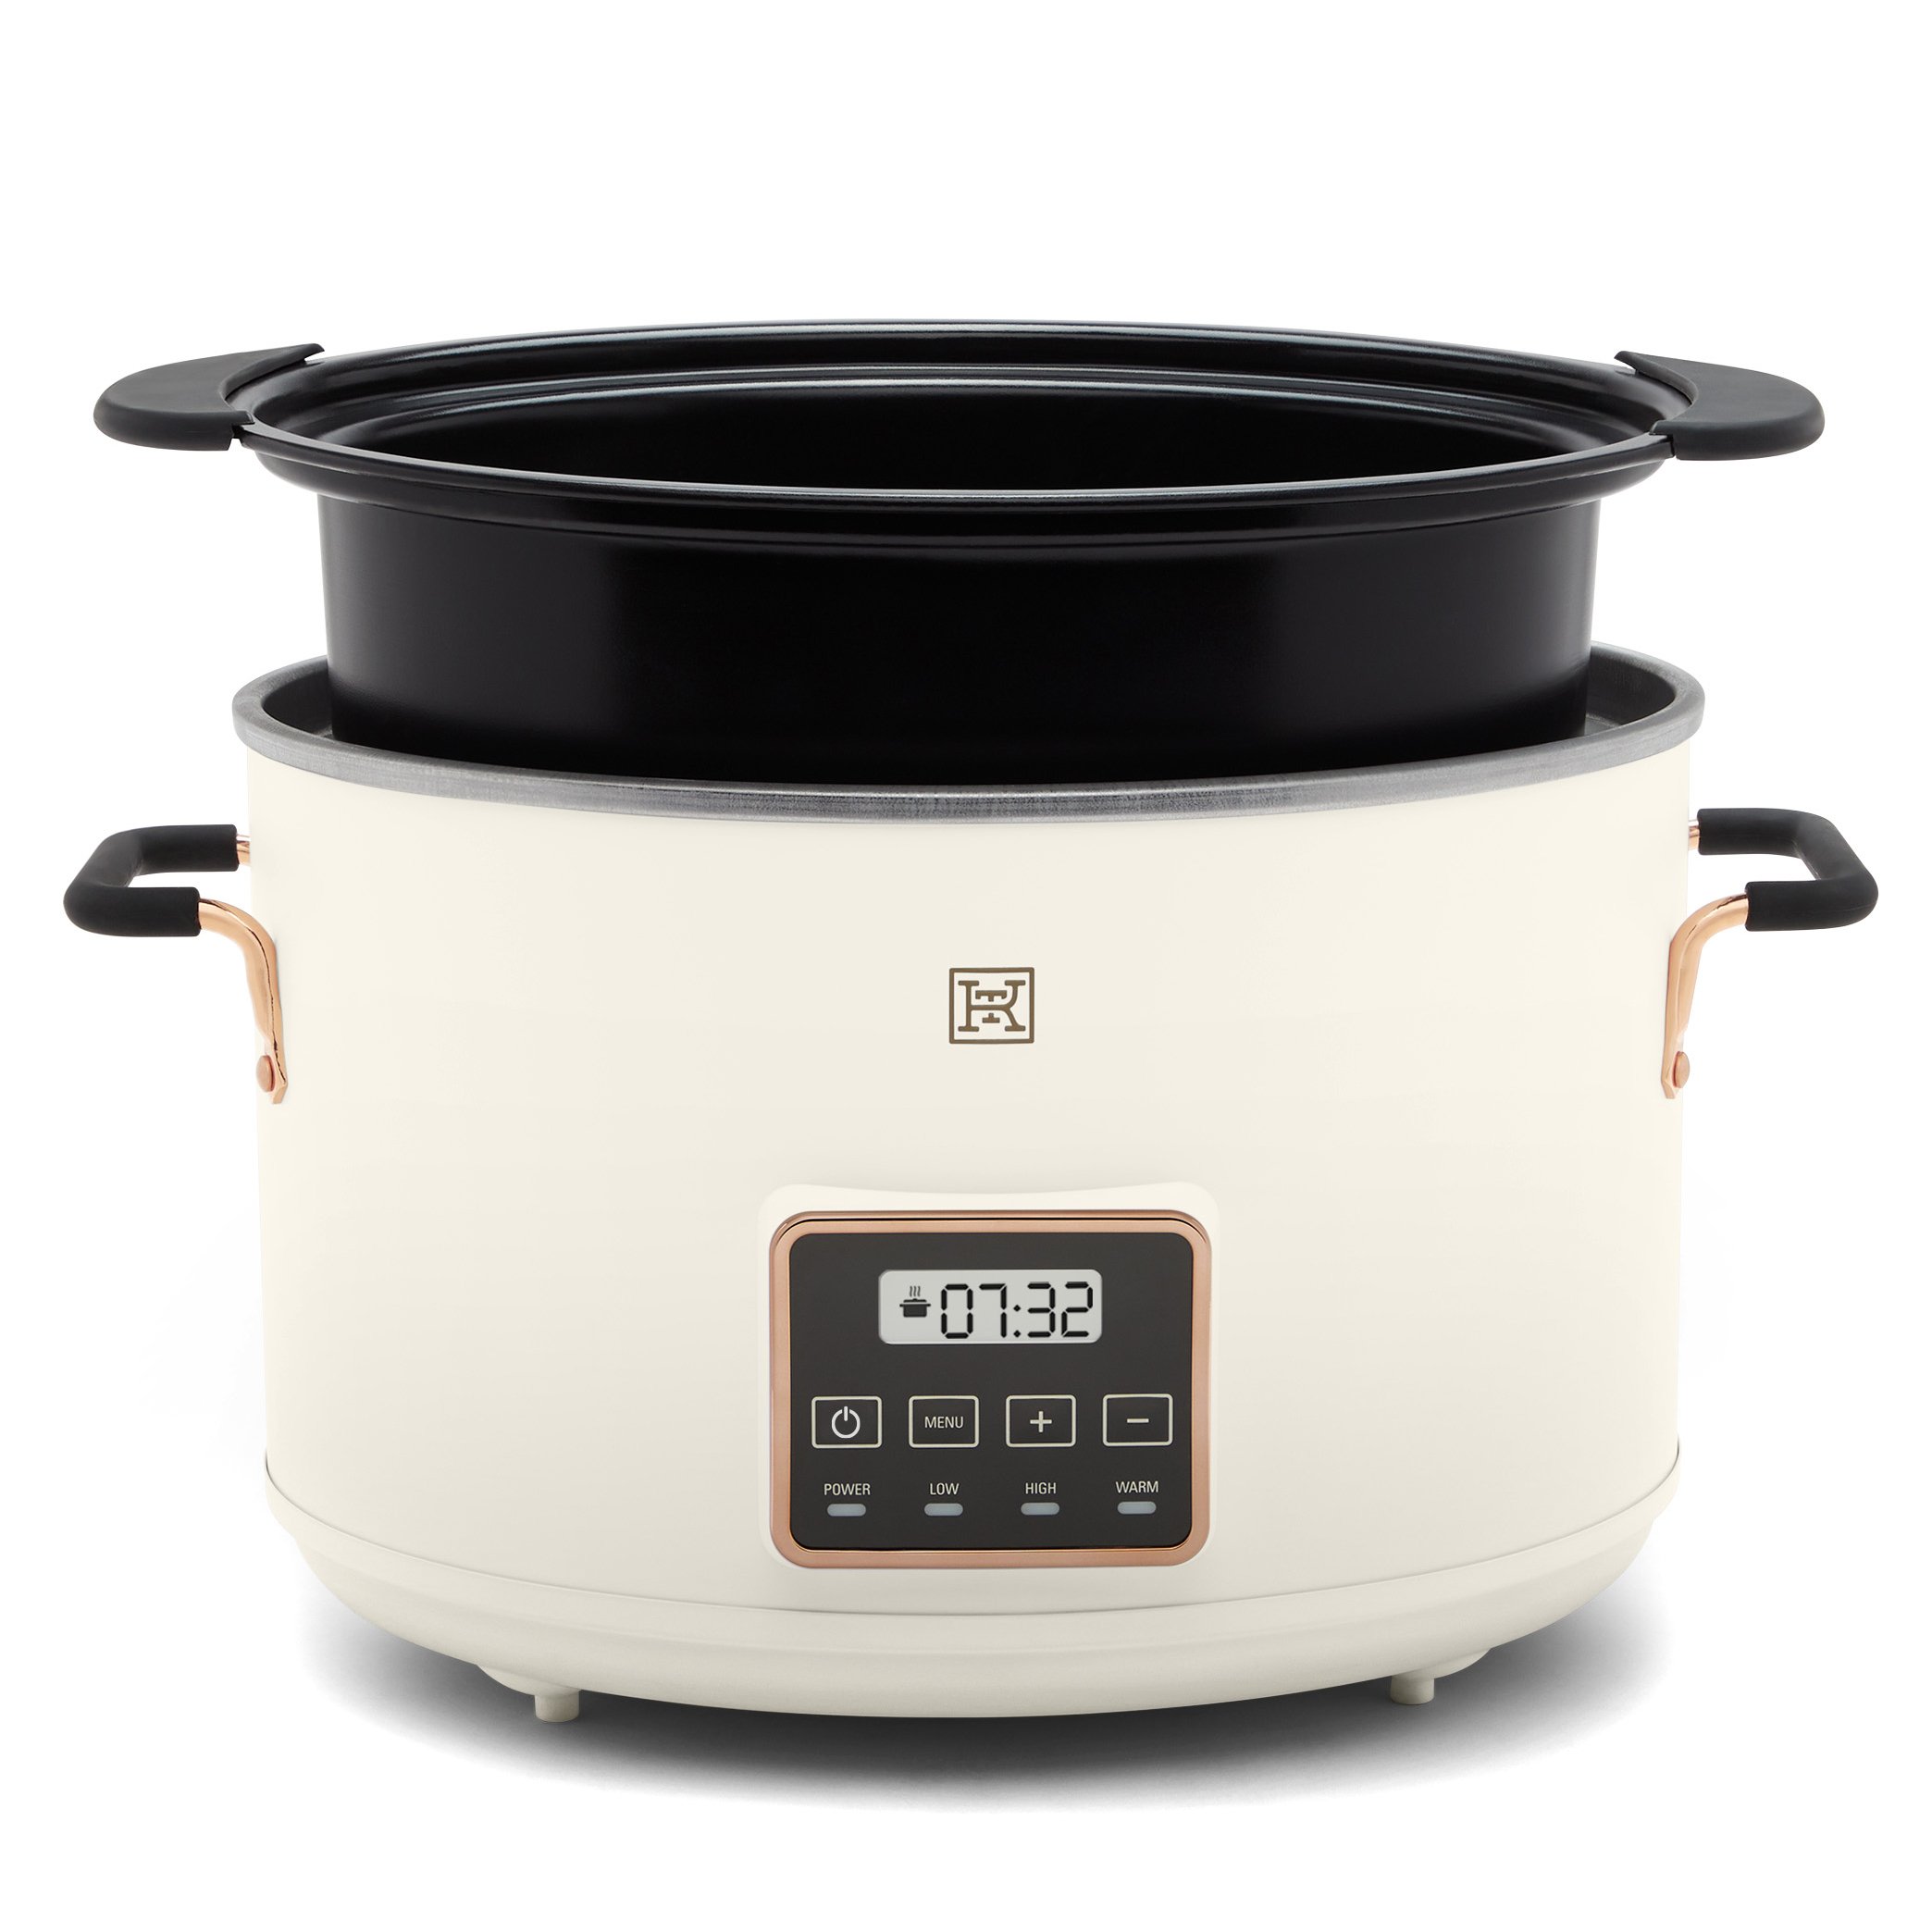 Crock-Pot Smart-Pot Slow Cooker - Shop Cookers & Roasters at H-E-B